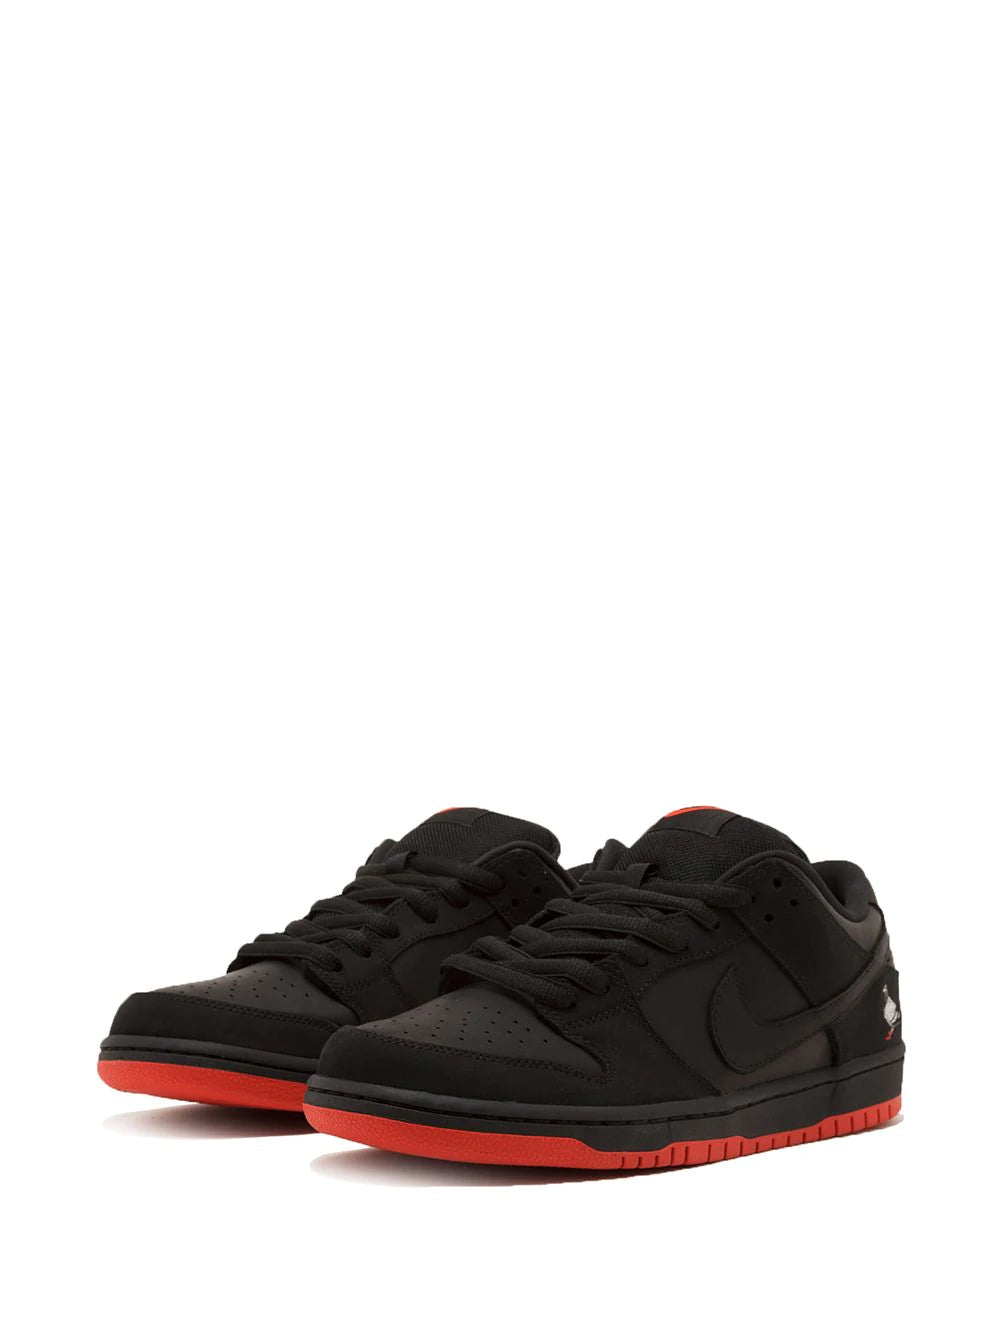 Nike SB Dunk Low TRD QS Black Pigeon sneakers